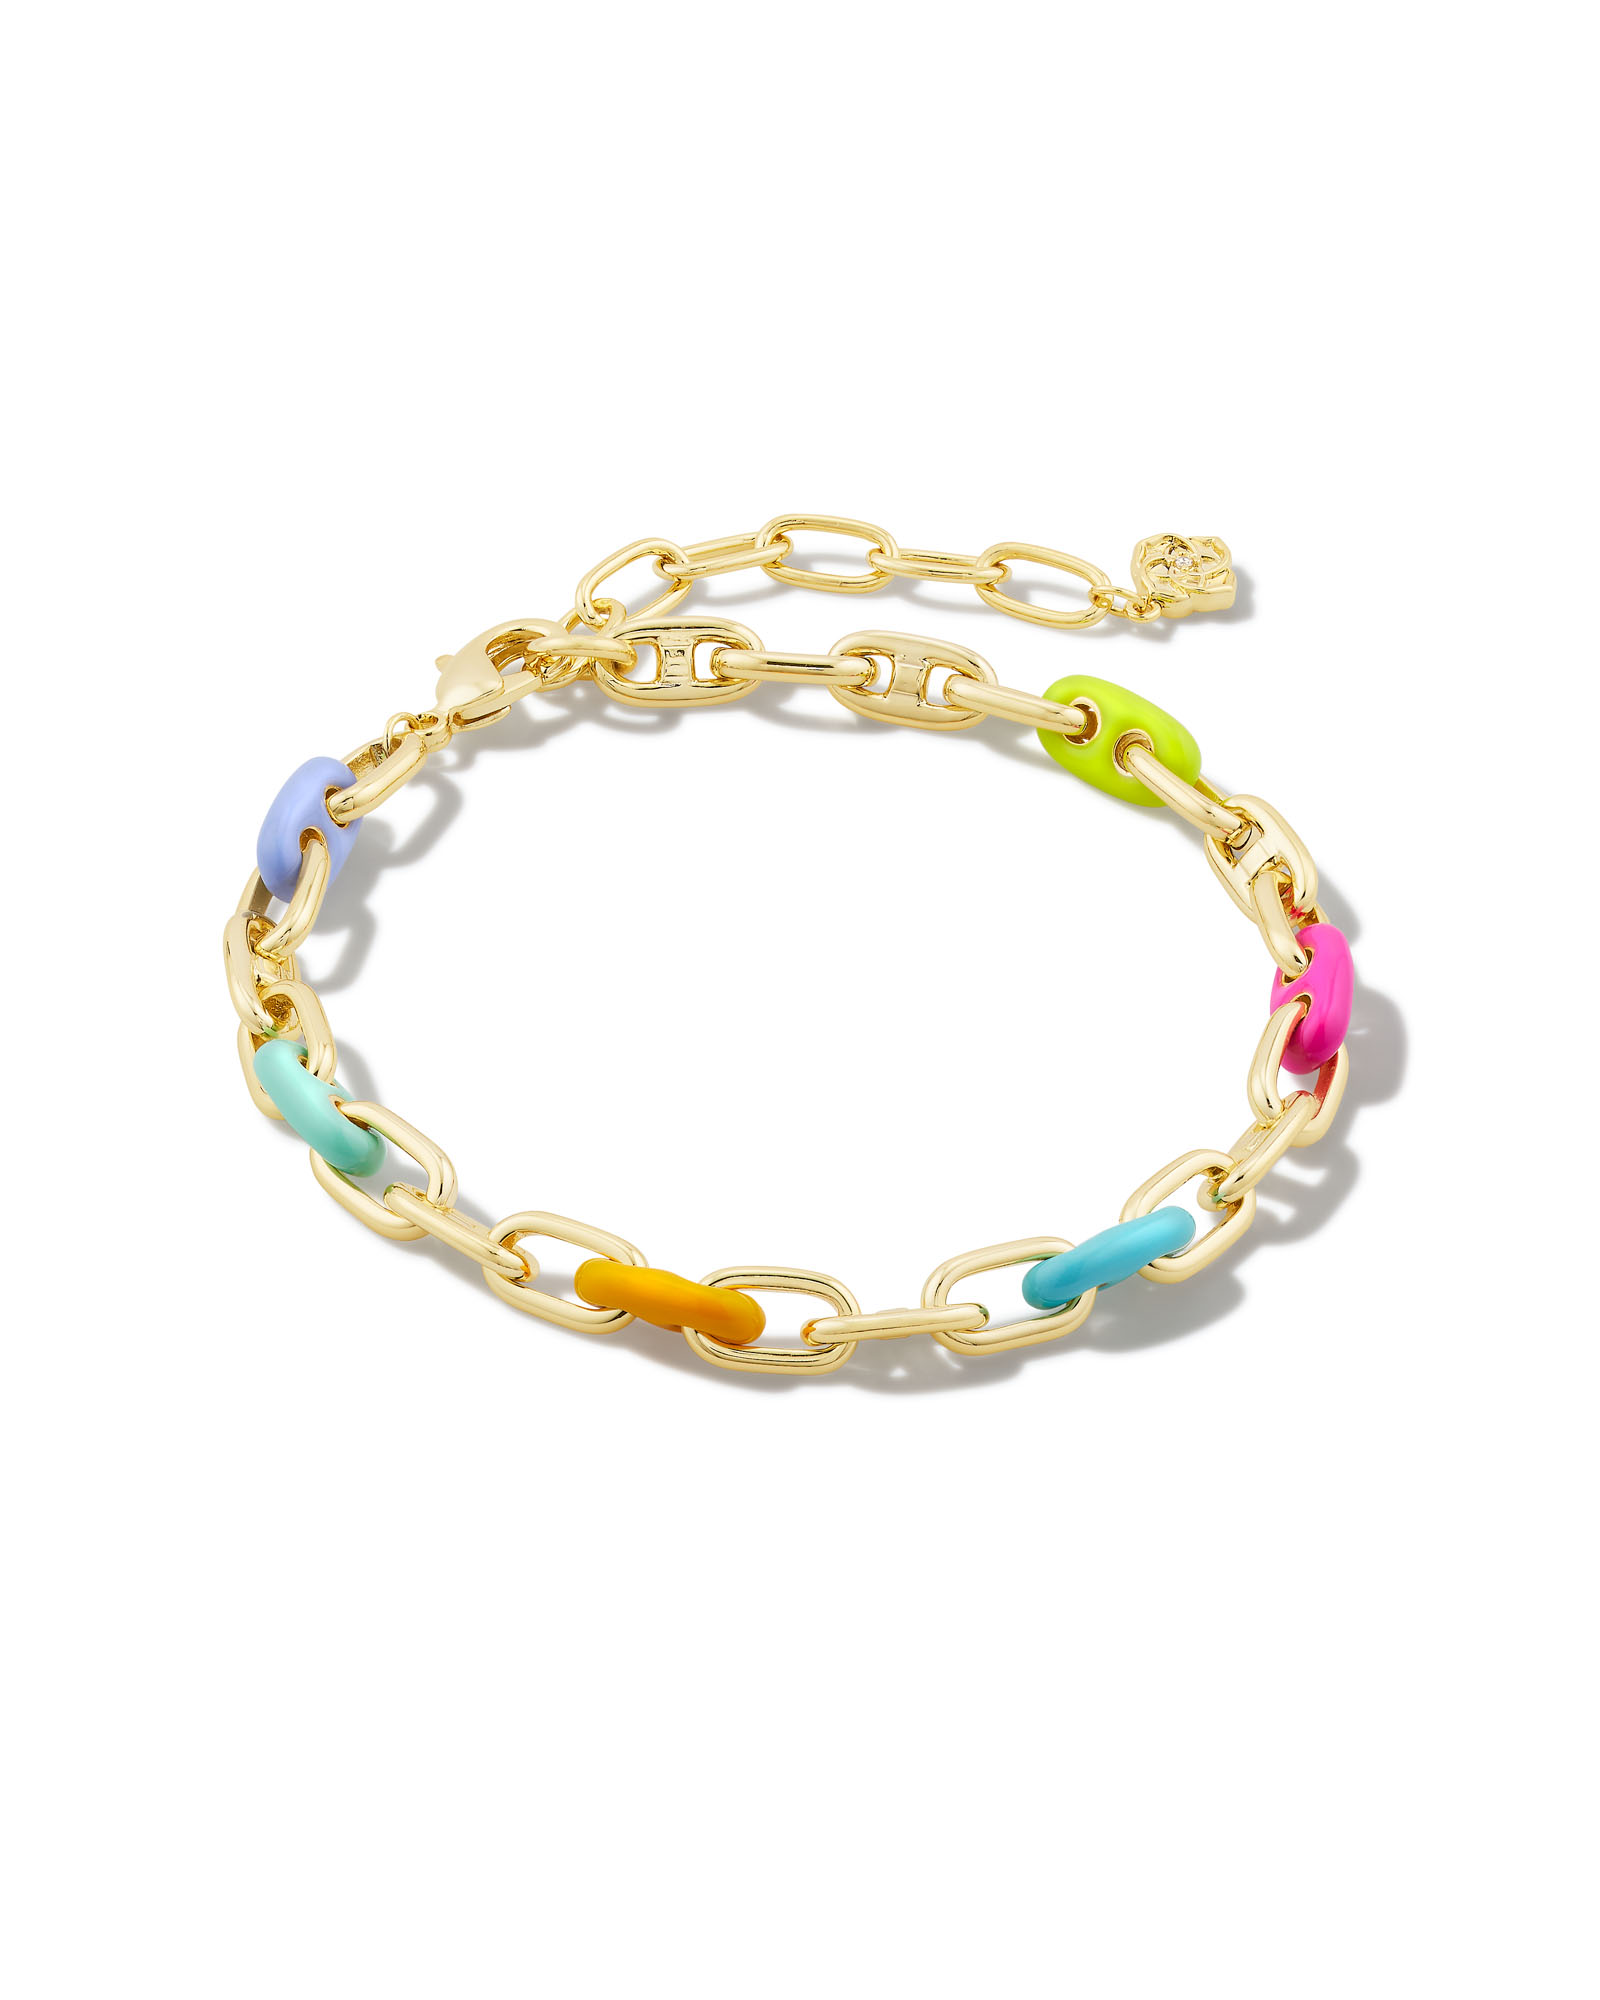 Bailey Gold Chain Bracelet in Rainbow Multi Mix | Kendra Scott